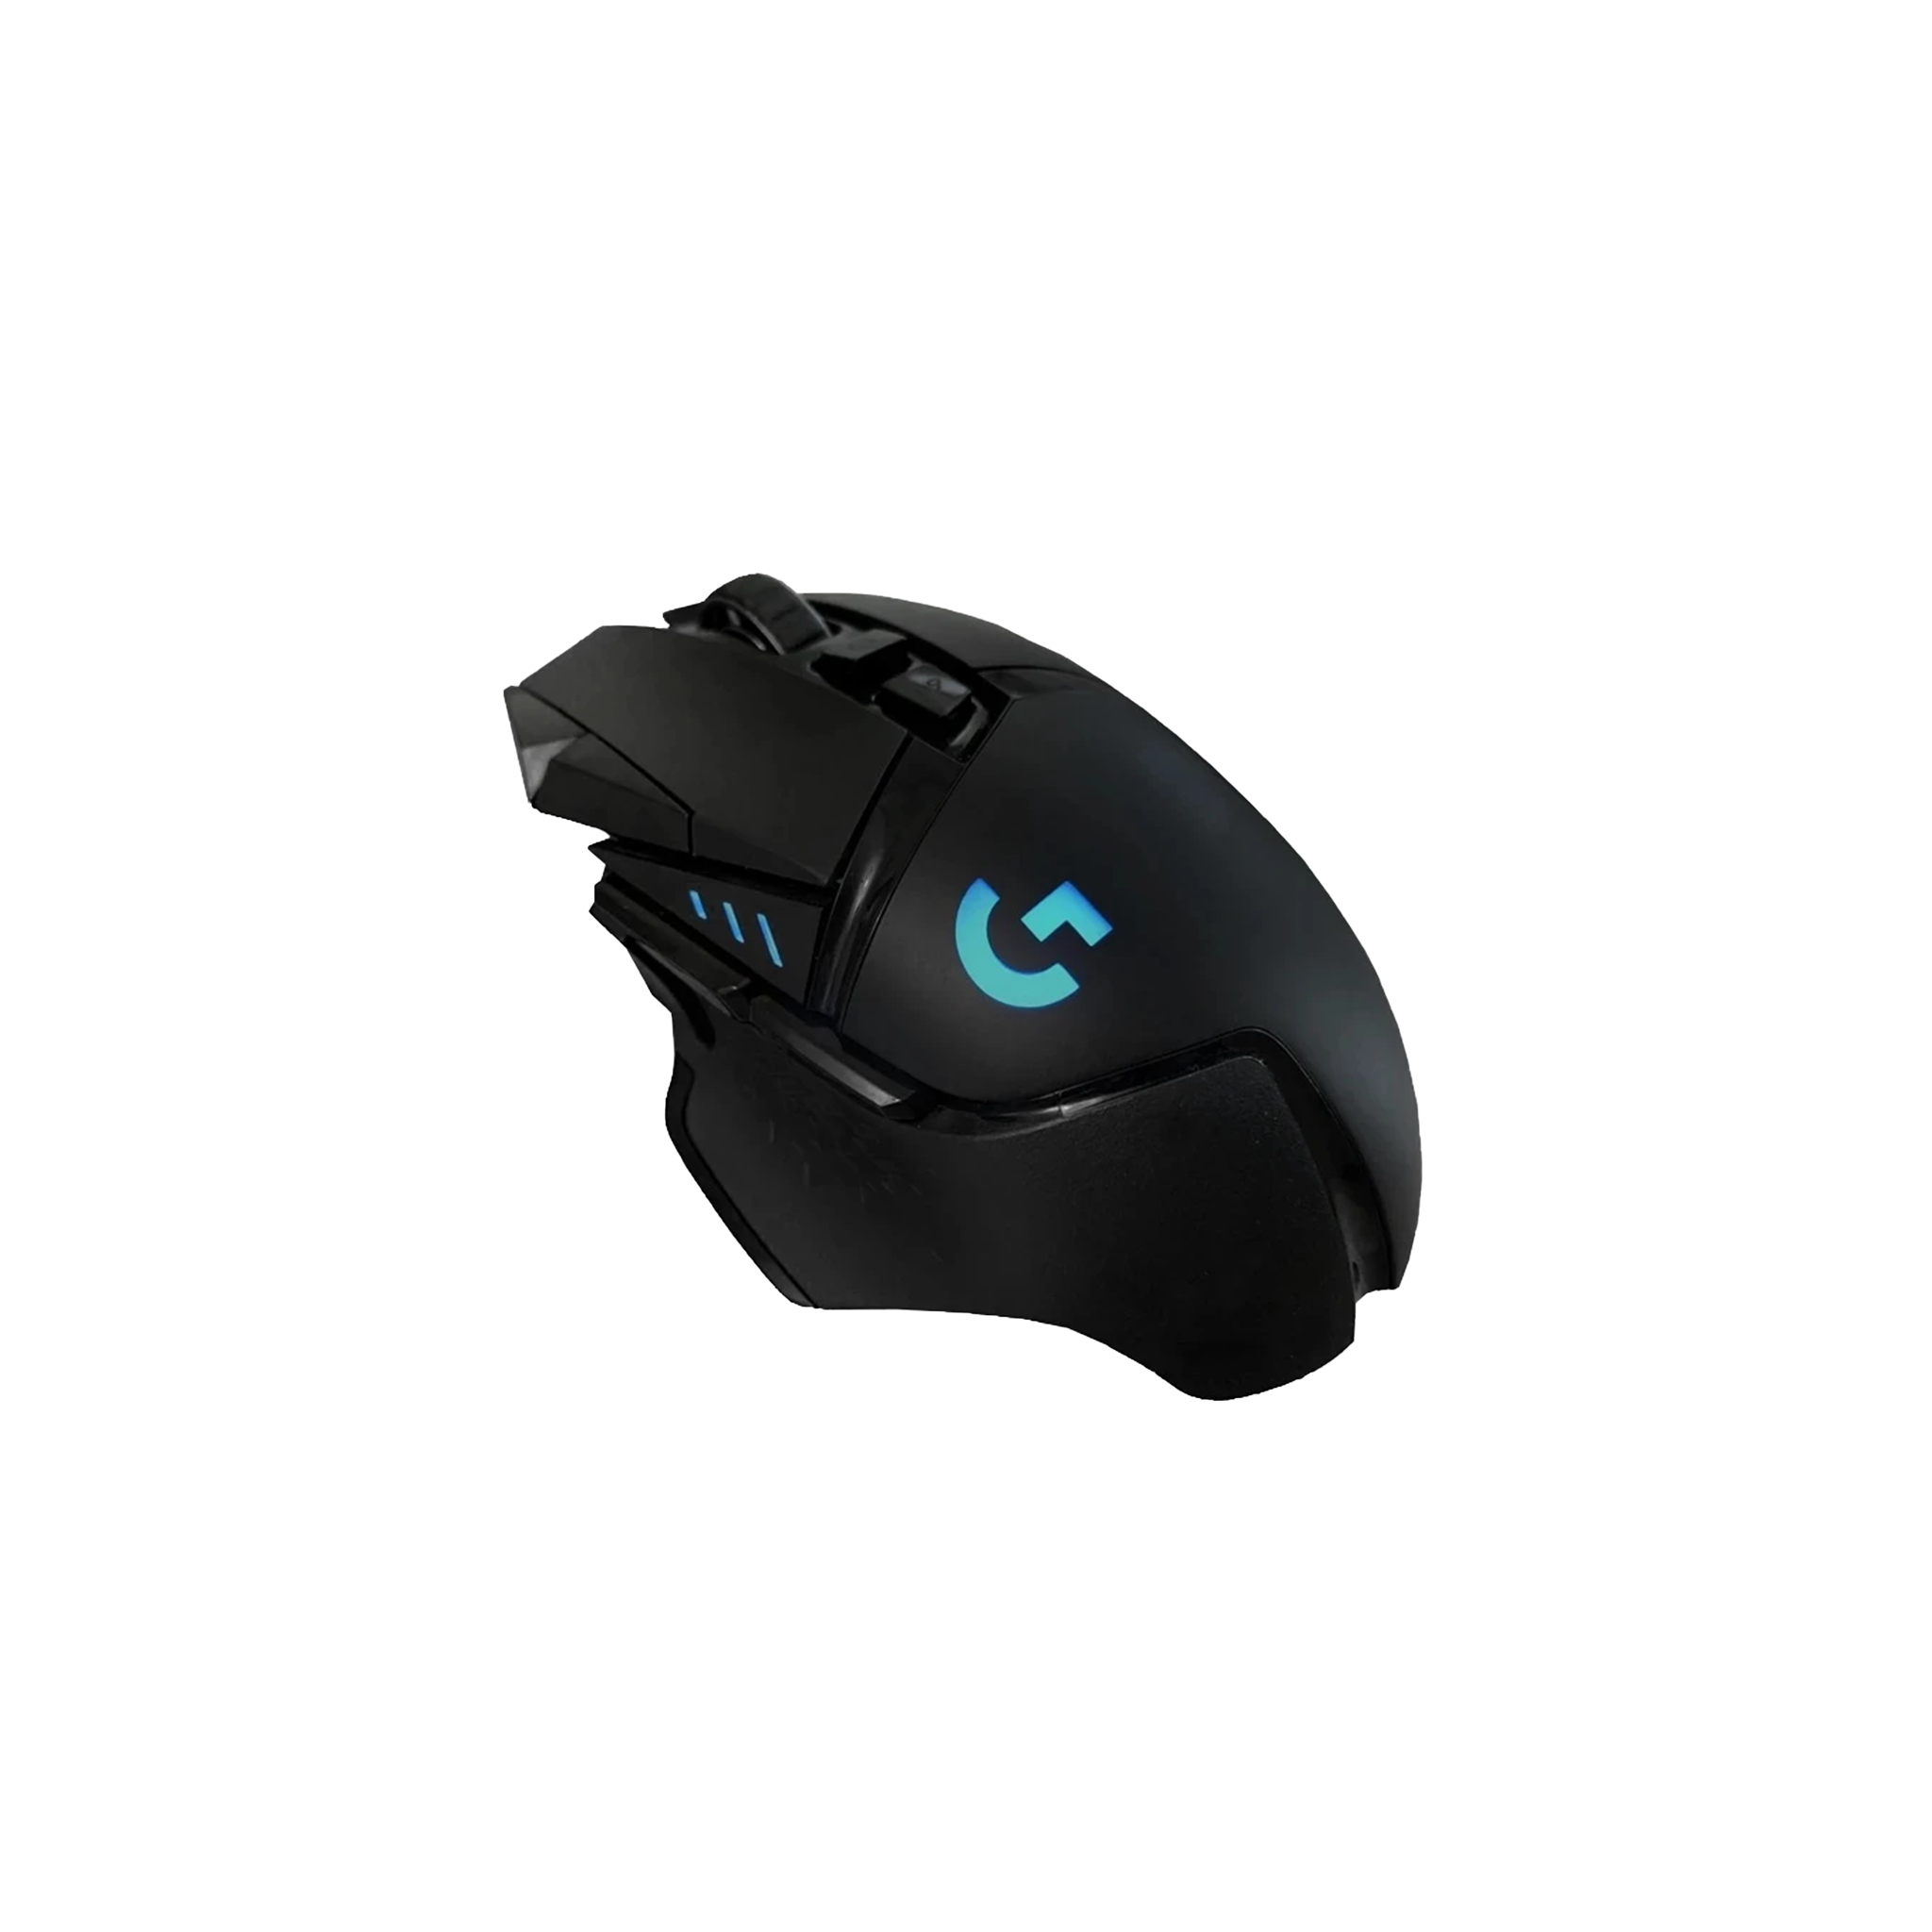 Logitech G502 HERO High Performance Gaming Mouse